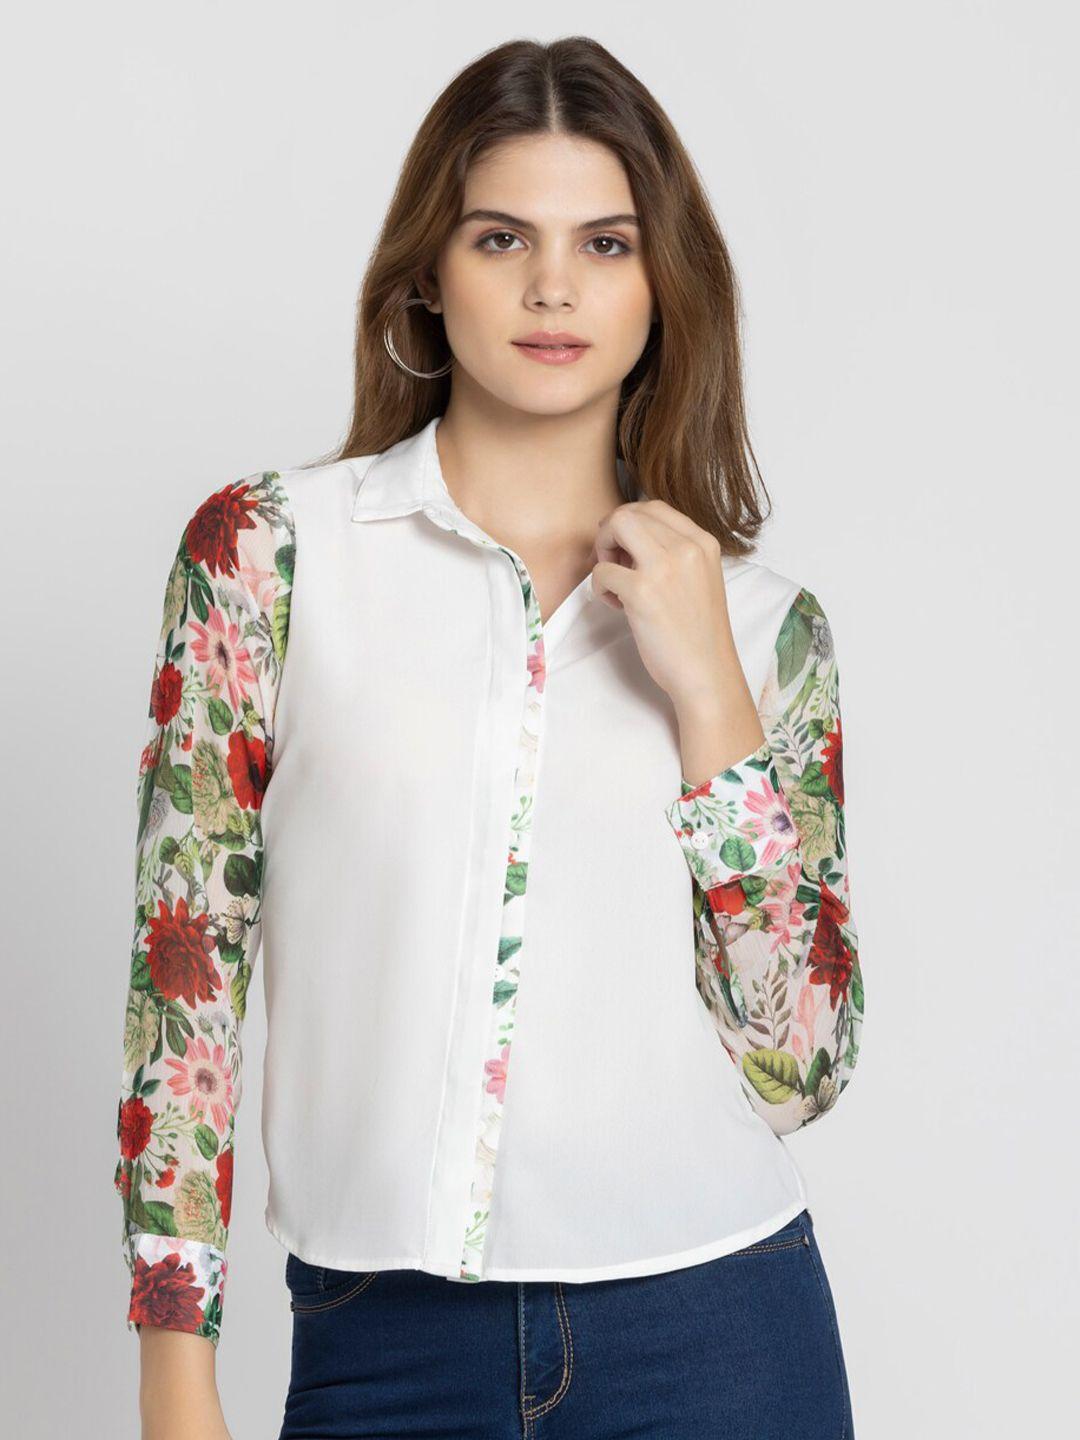 shaye smart slim fit floral printed casual shirt